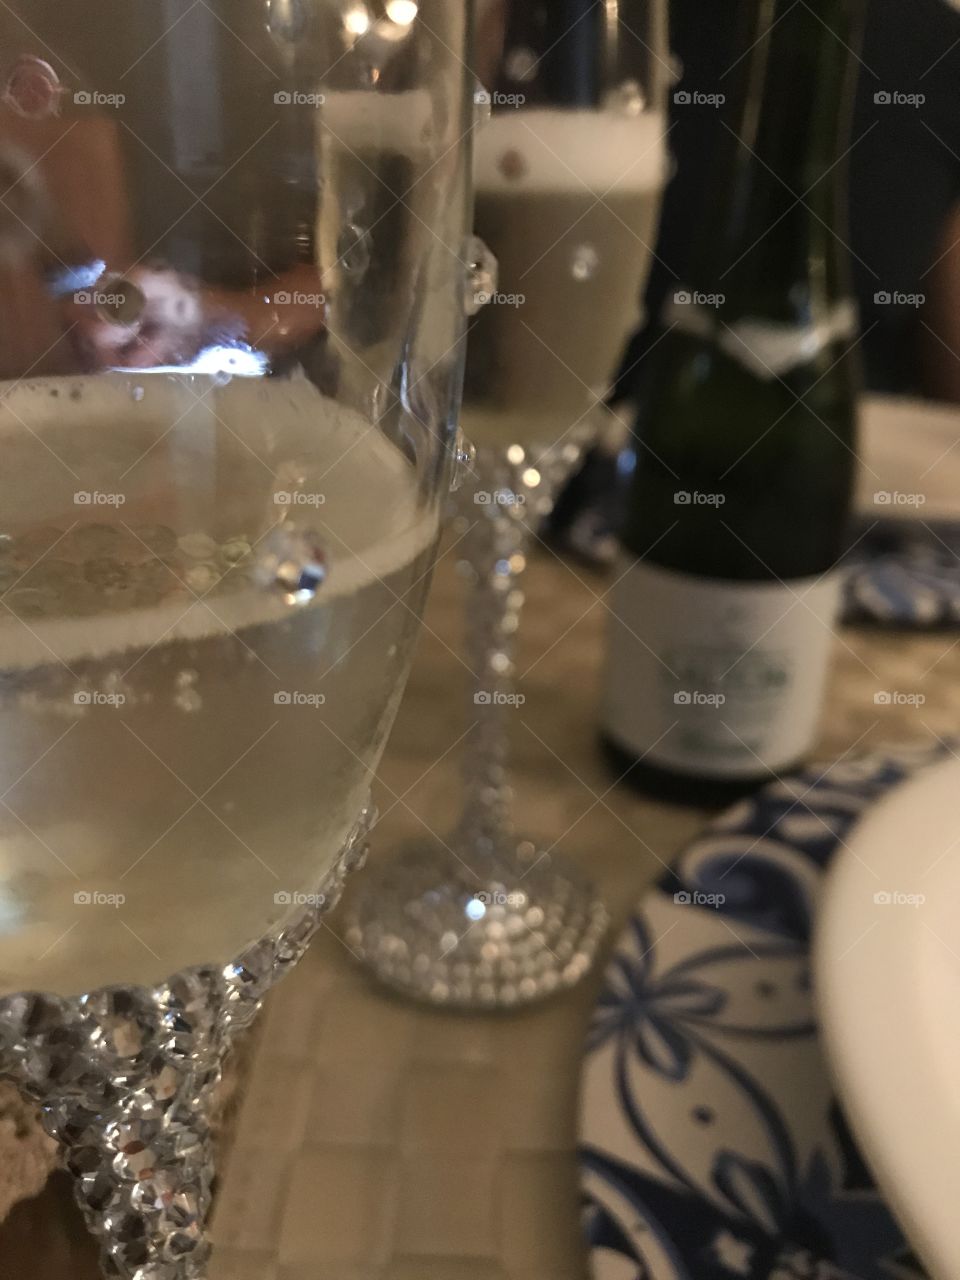 Champagne 